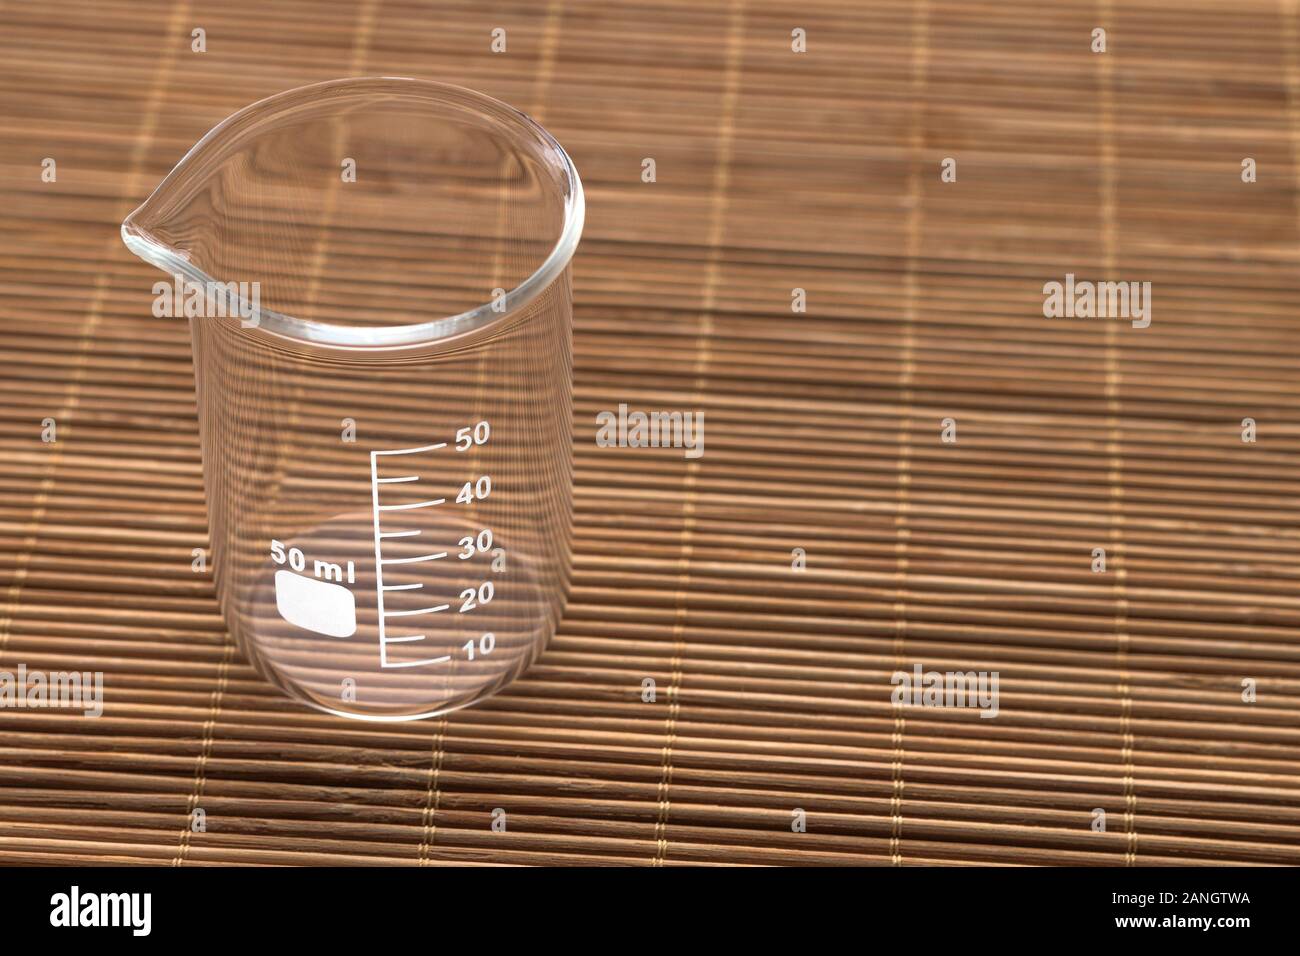 https://c8.alamy.com/comp/2ANGTWA/an-empty-glass-50-ml-beaker-on-a-wooden-surface-2ANGTWA.jpg